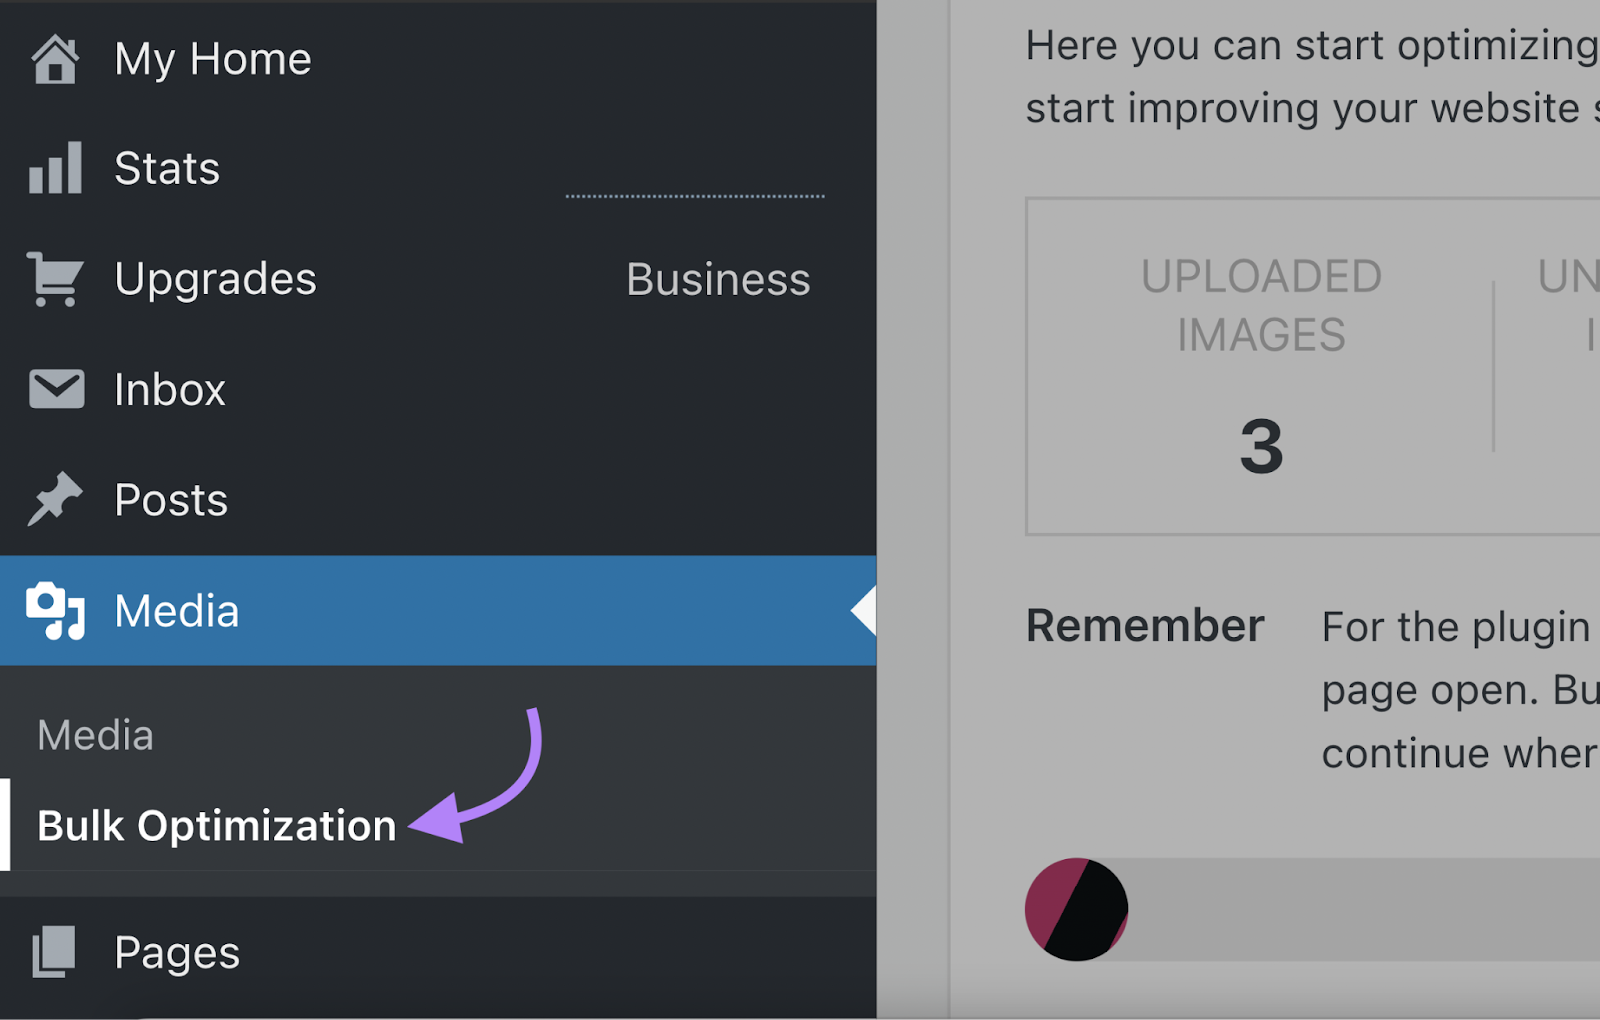 “Bulk Optimization” option shown on the WordPress menu.